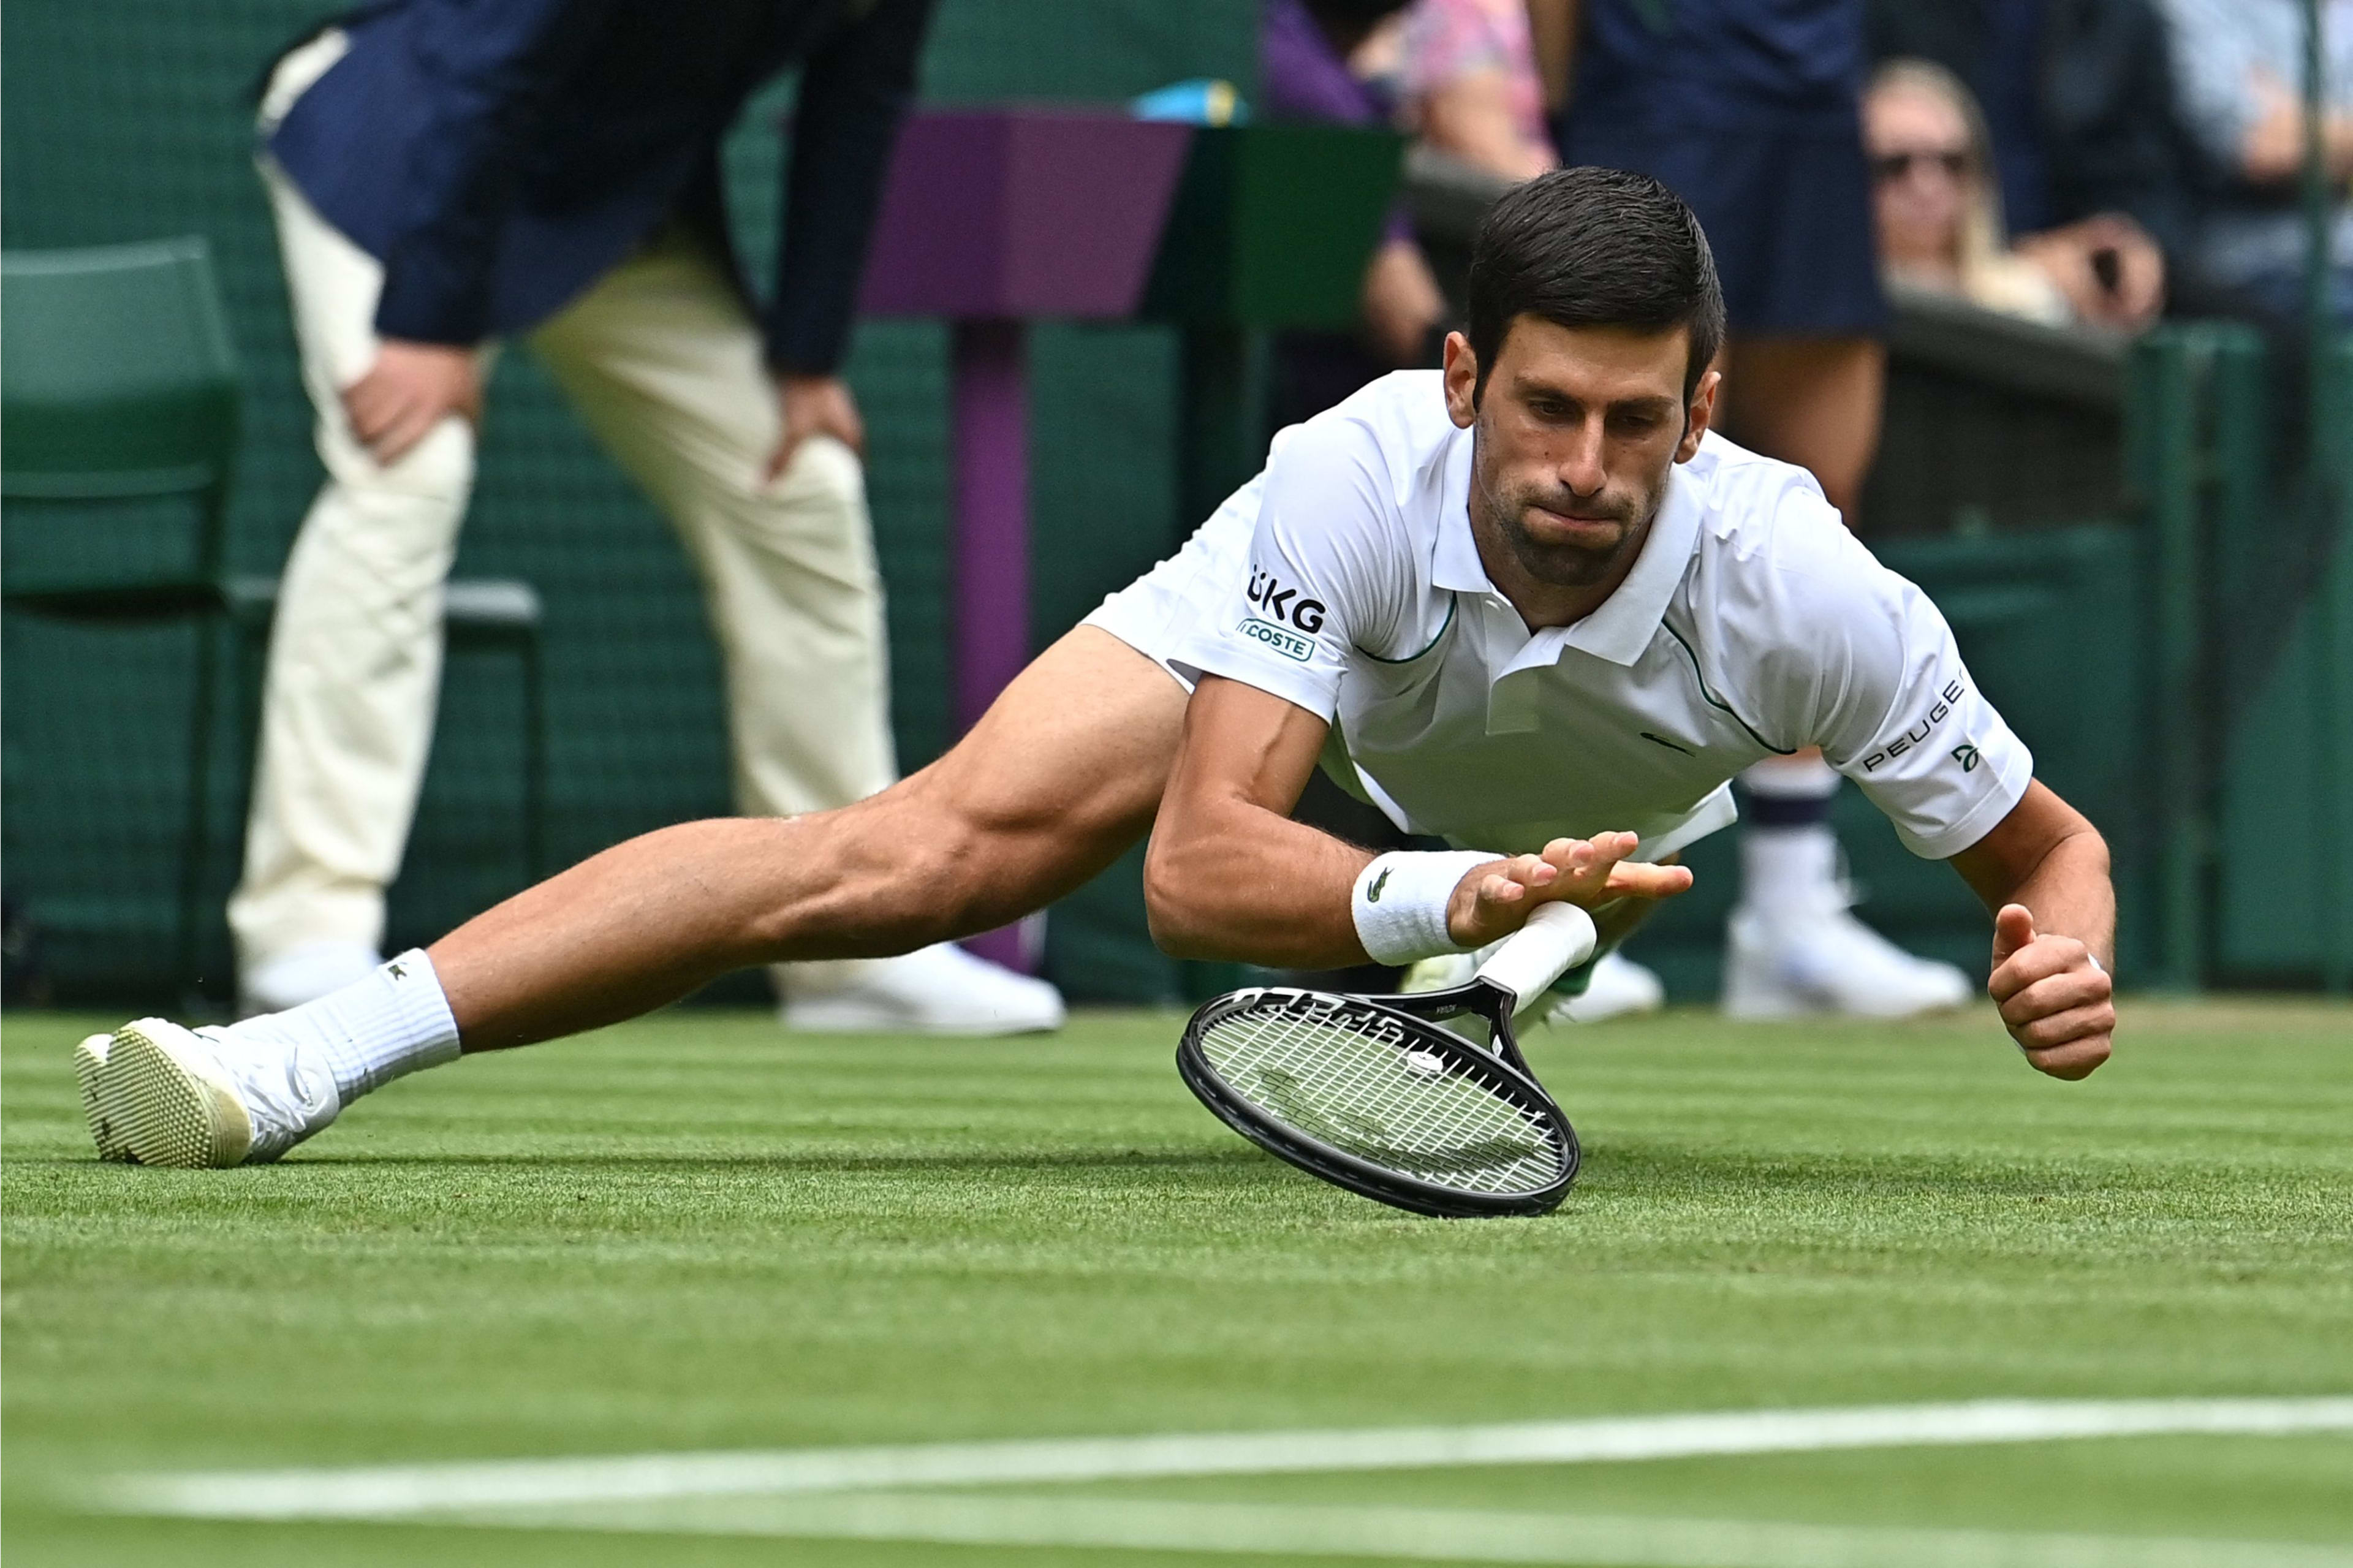 Wimbledon 2021 results  Novak Djokovic wins, multiple slips on grass court